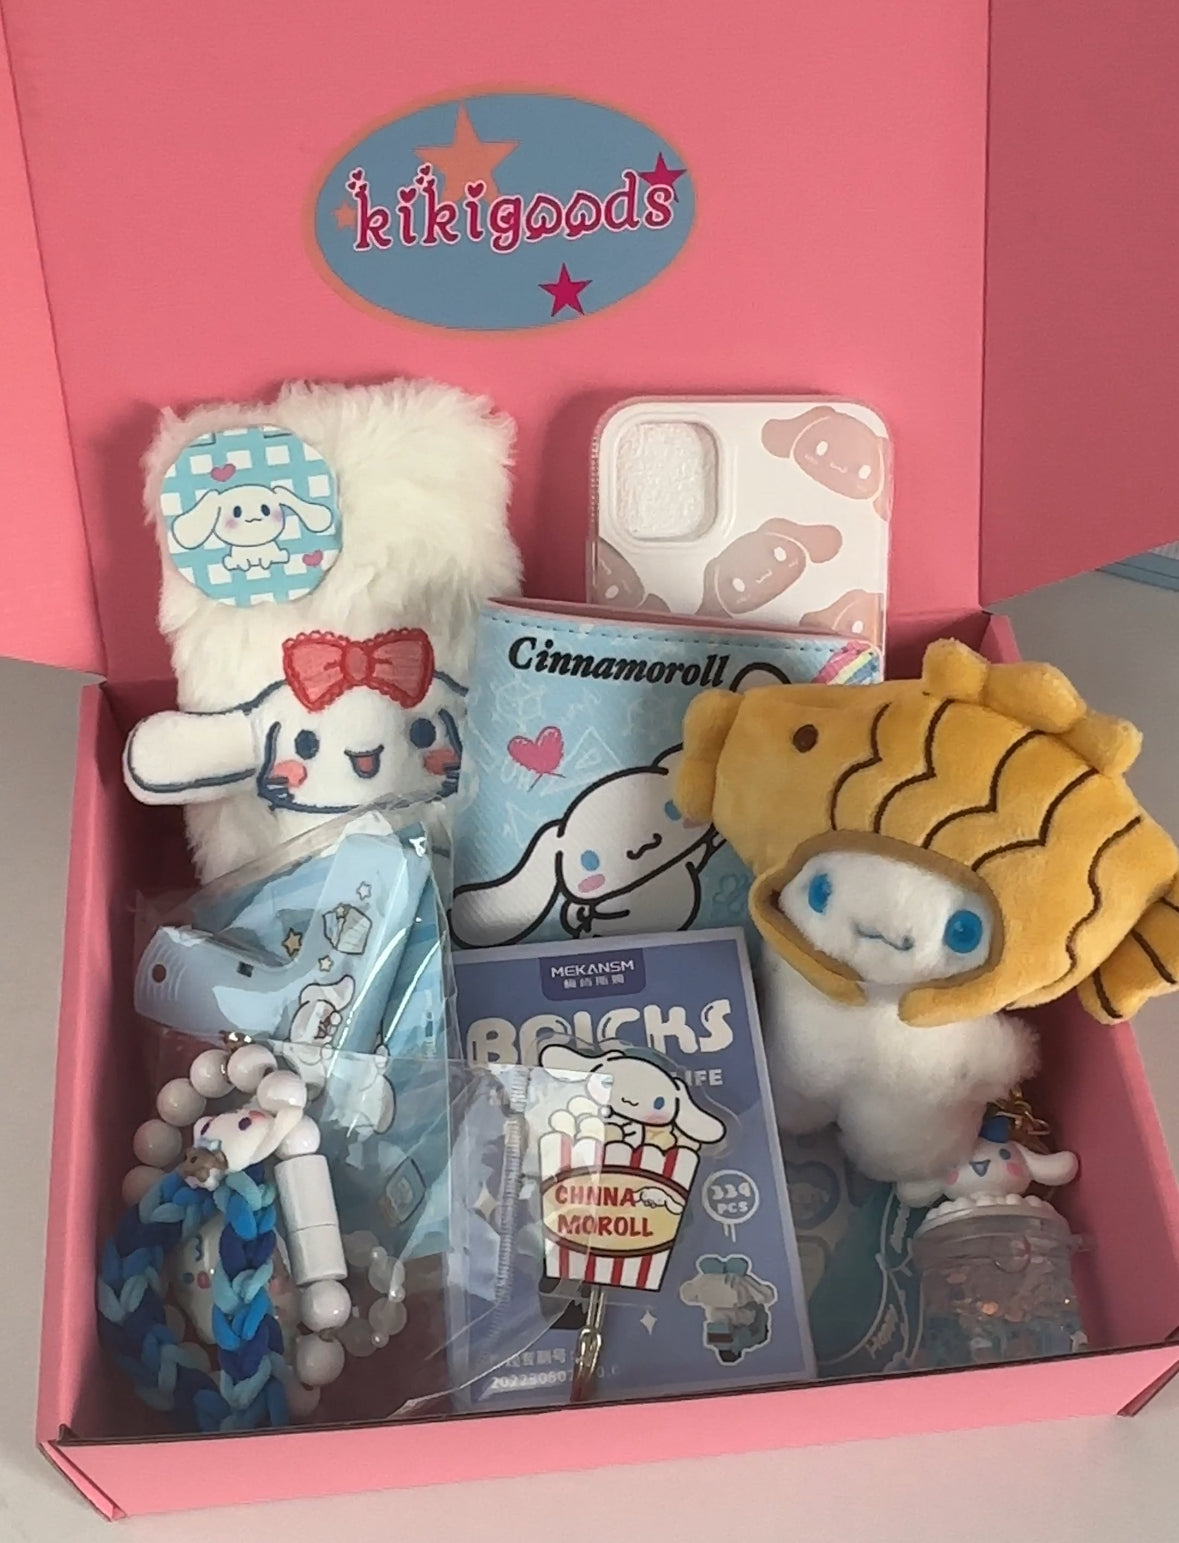 Sanrio lucky box blind box phonecase mystery box - kikigoods